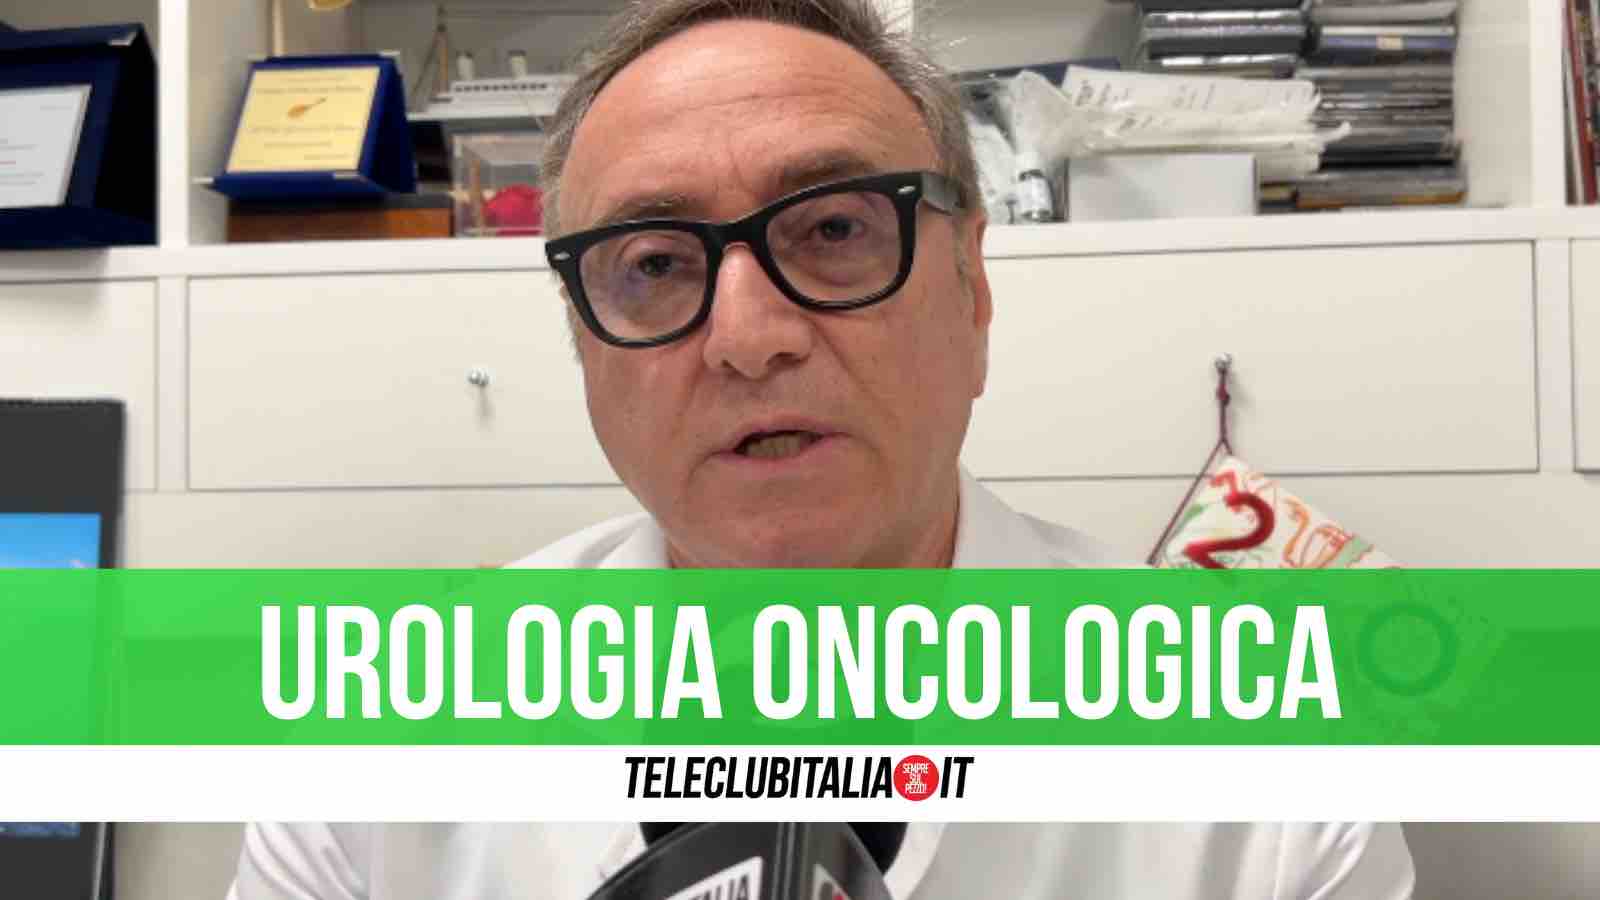 Urologia oncologica